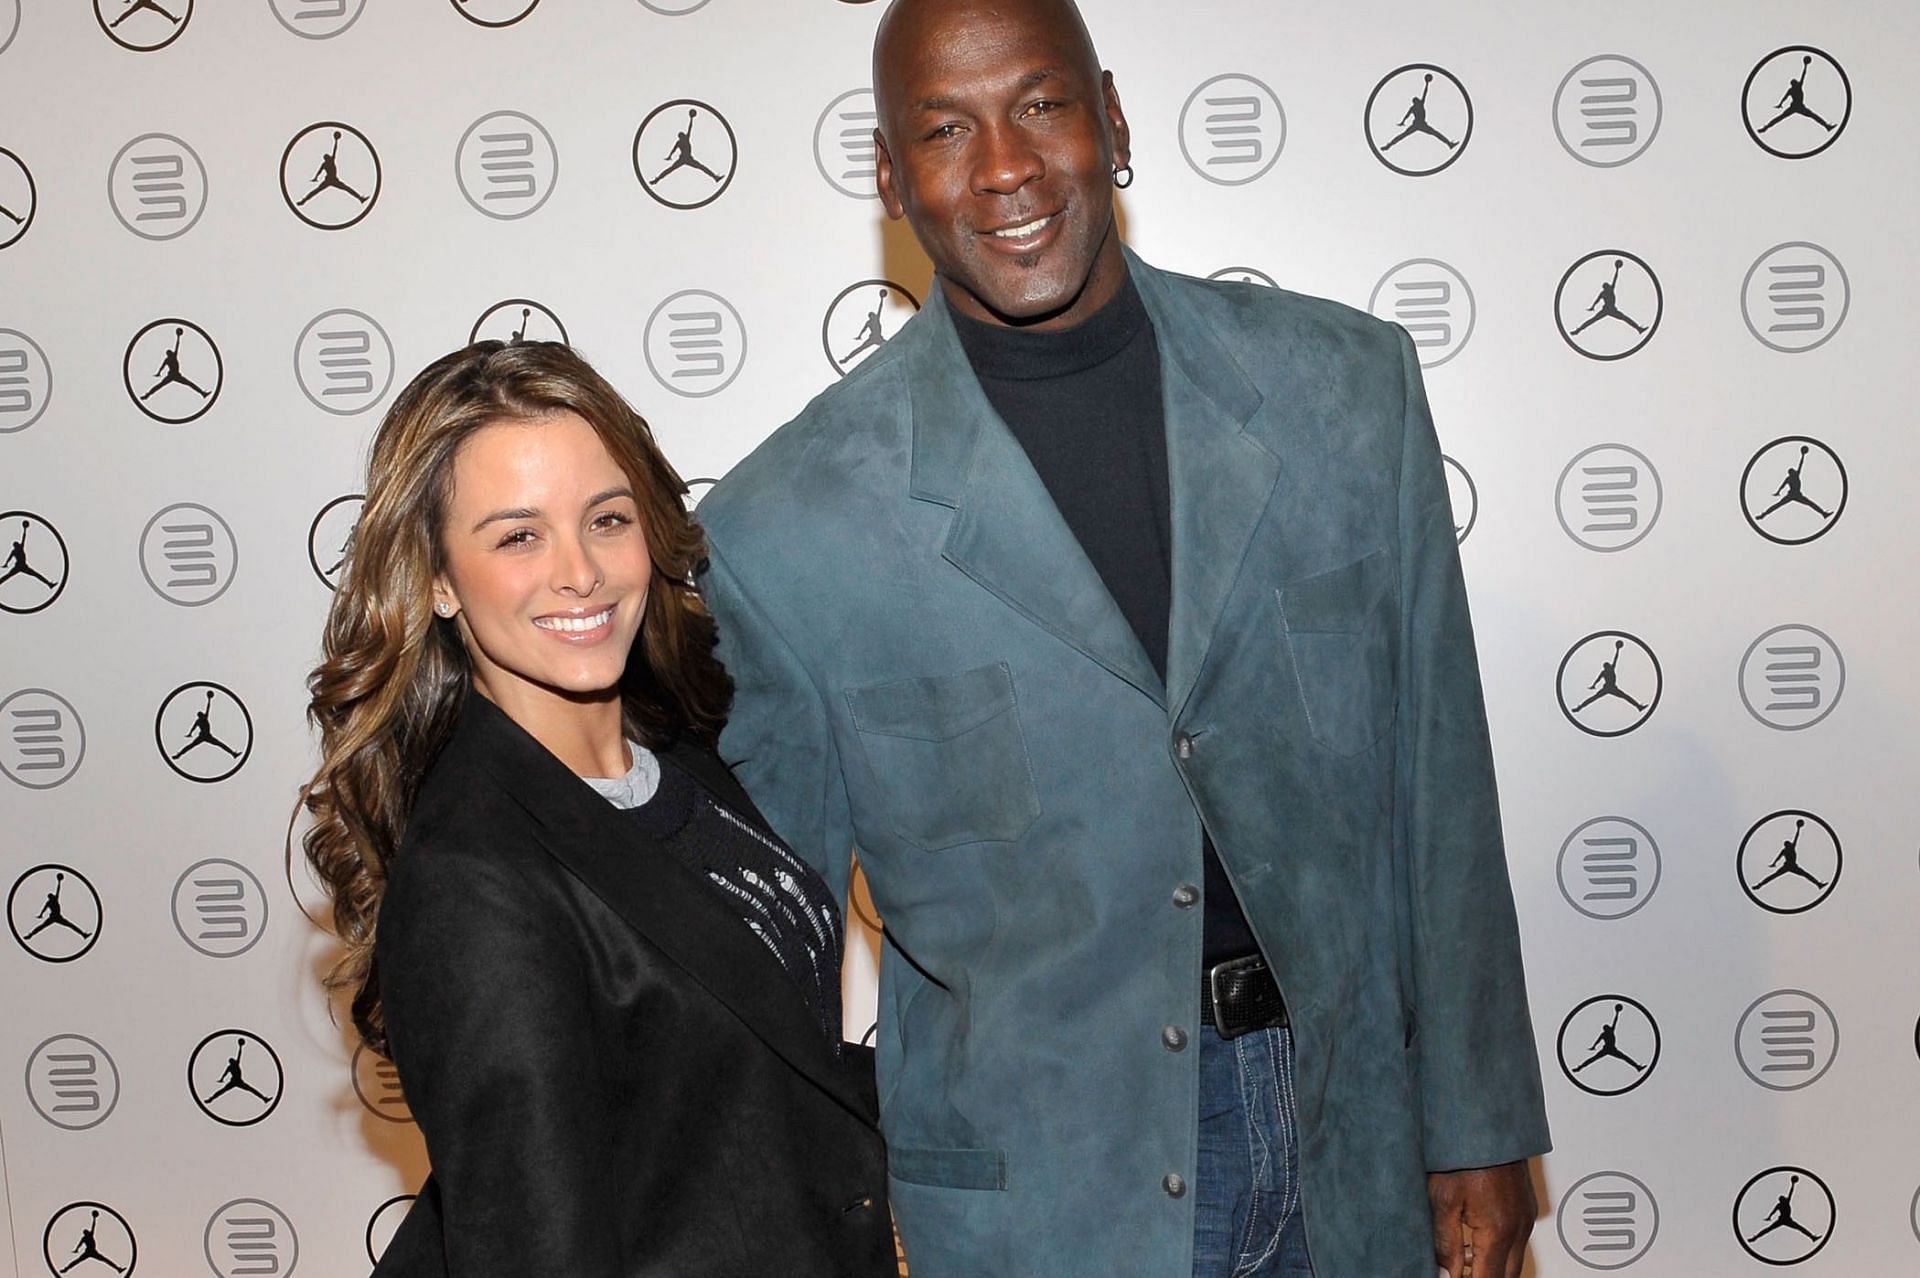 Michael Jordan and his wife, Yvette Prieto